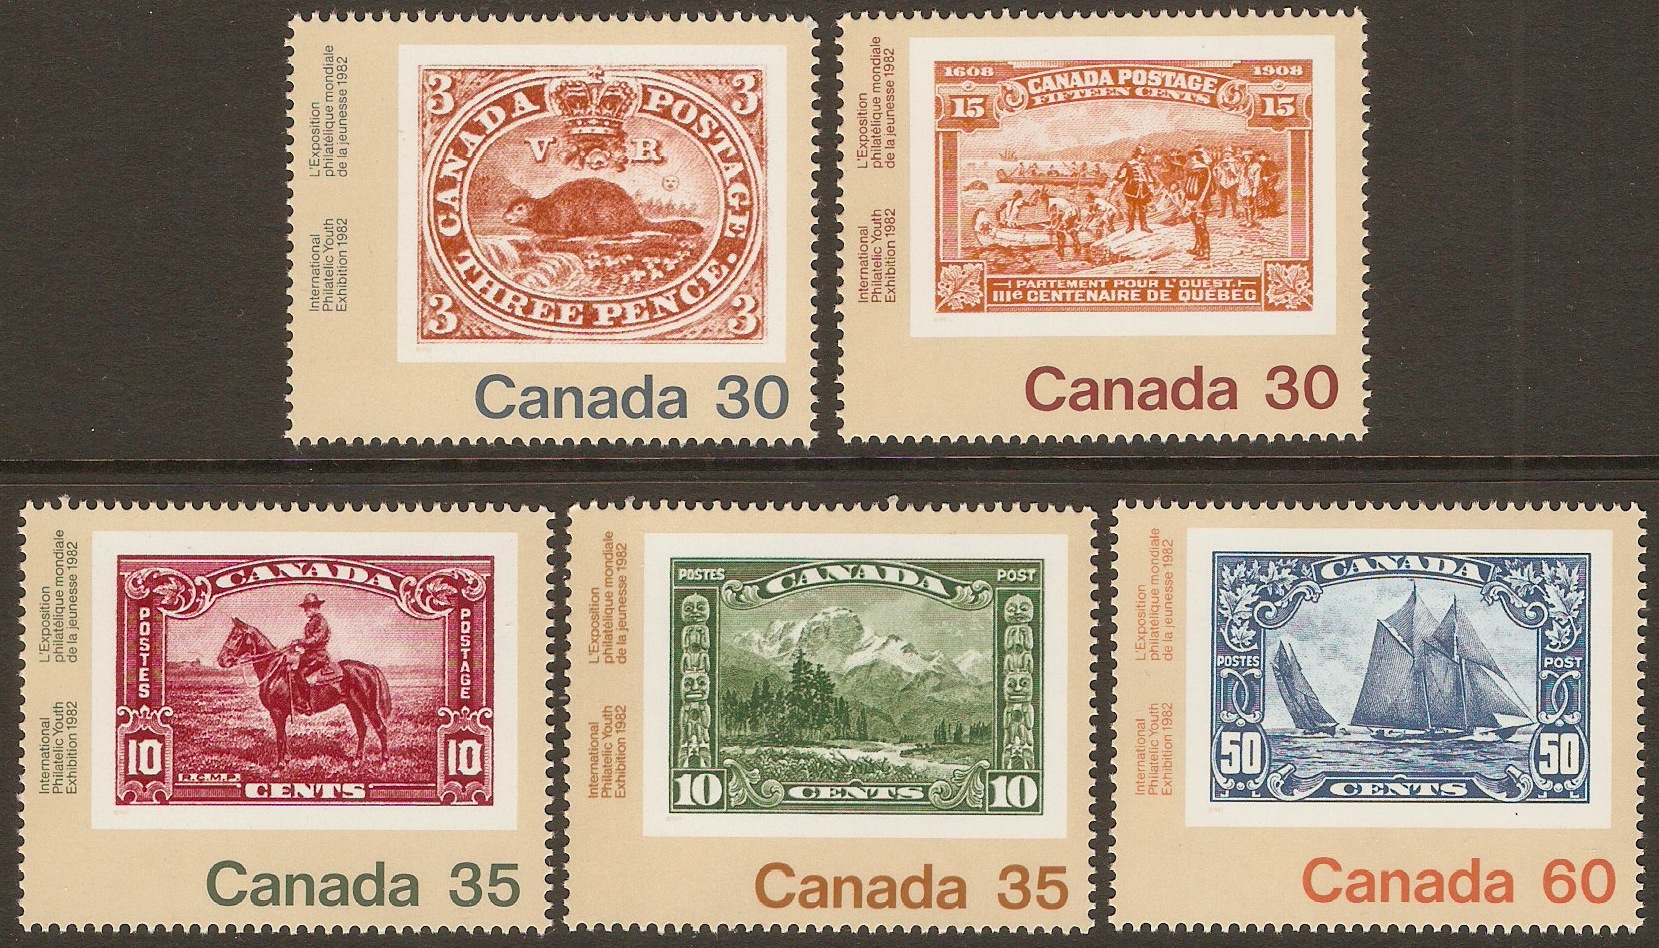 Canada 1982 Stamp Exhibition - "Canada 82" set. SG1037-SG1041.